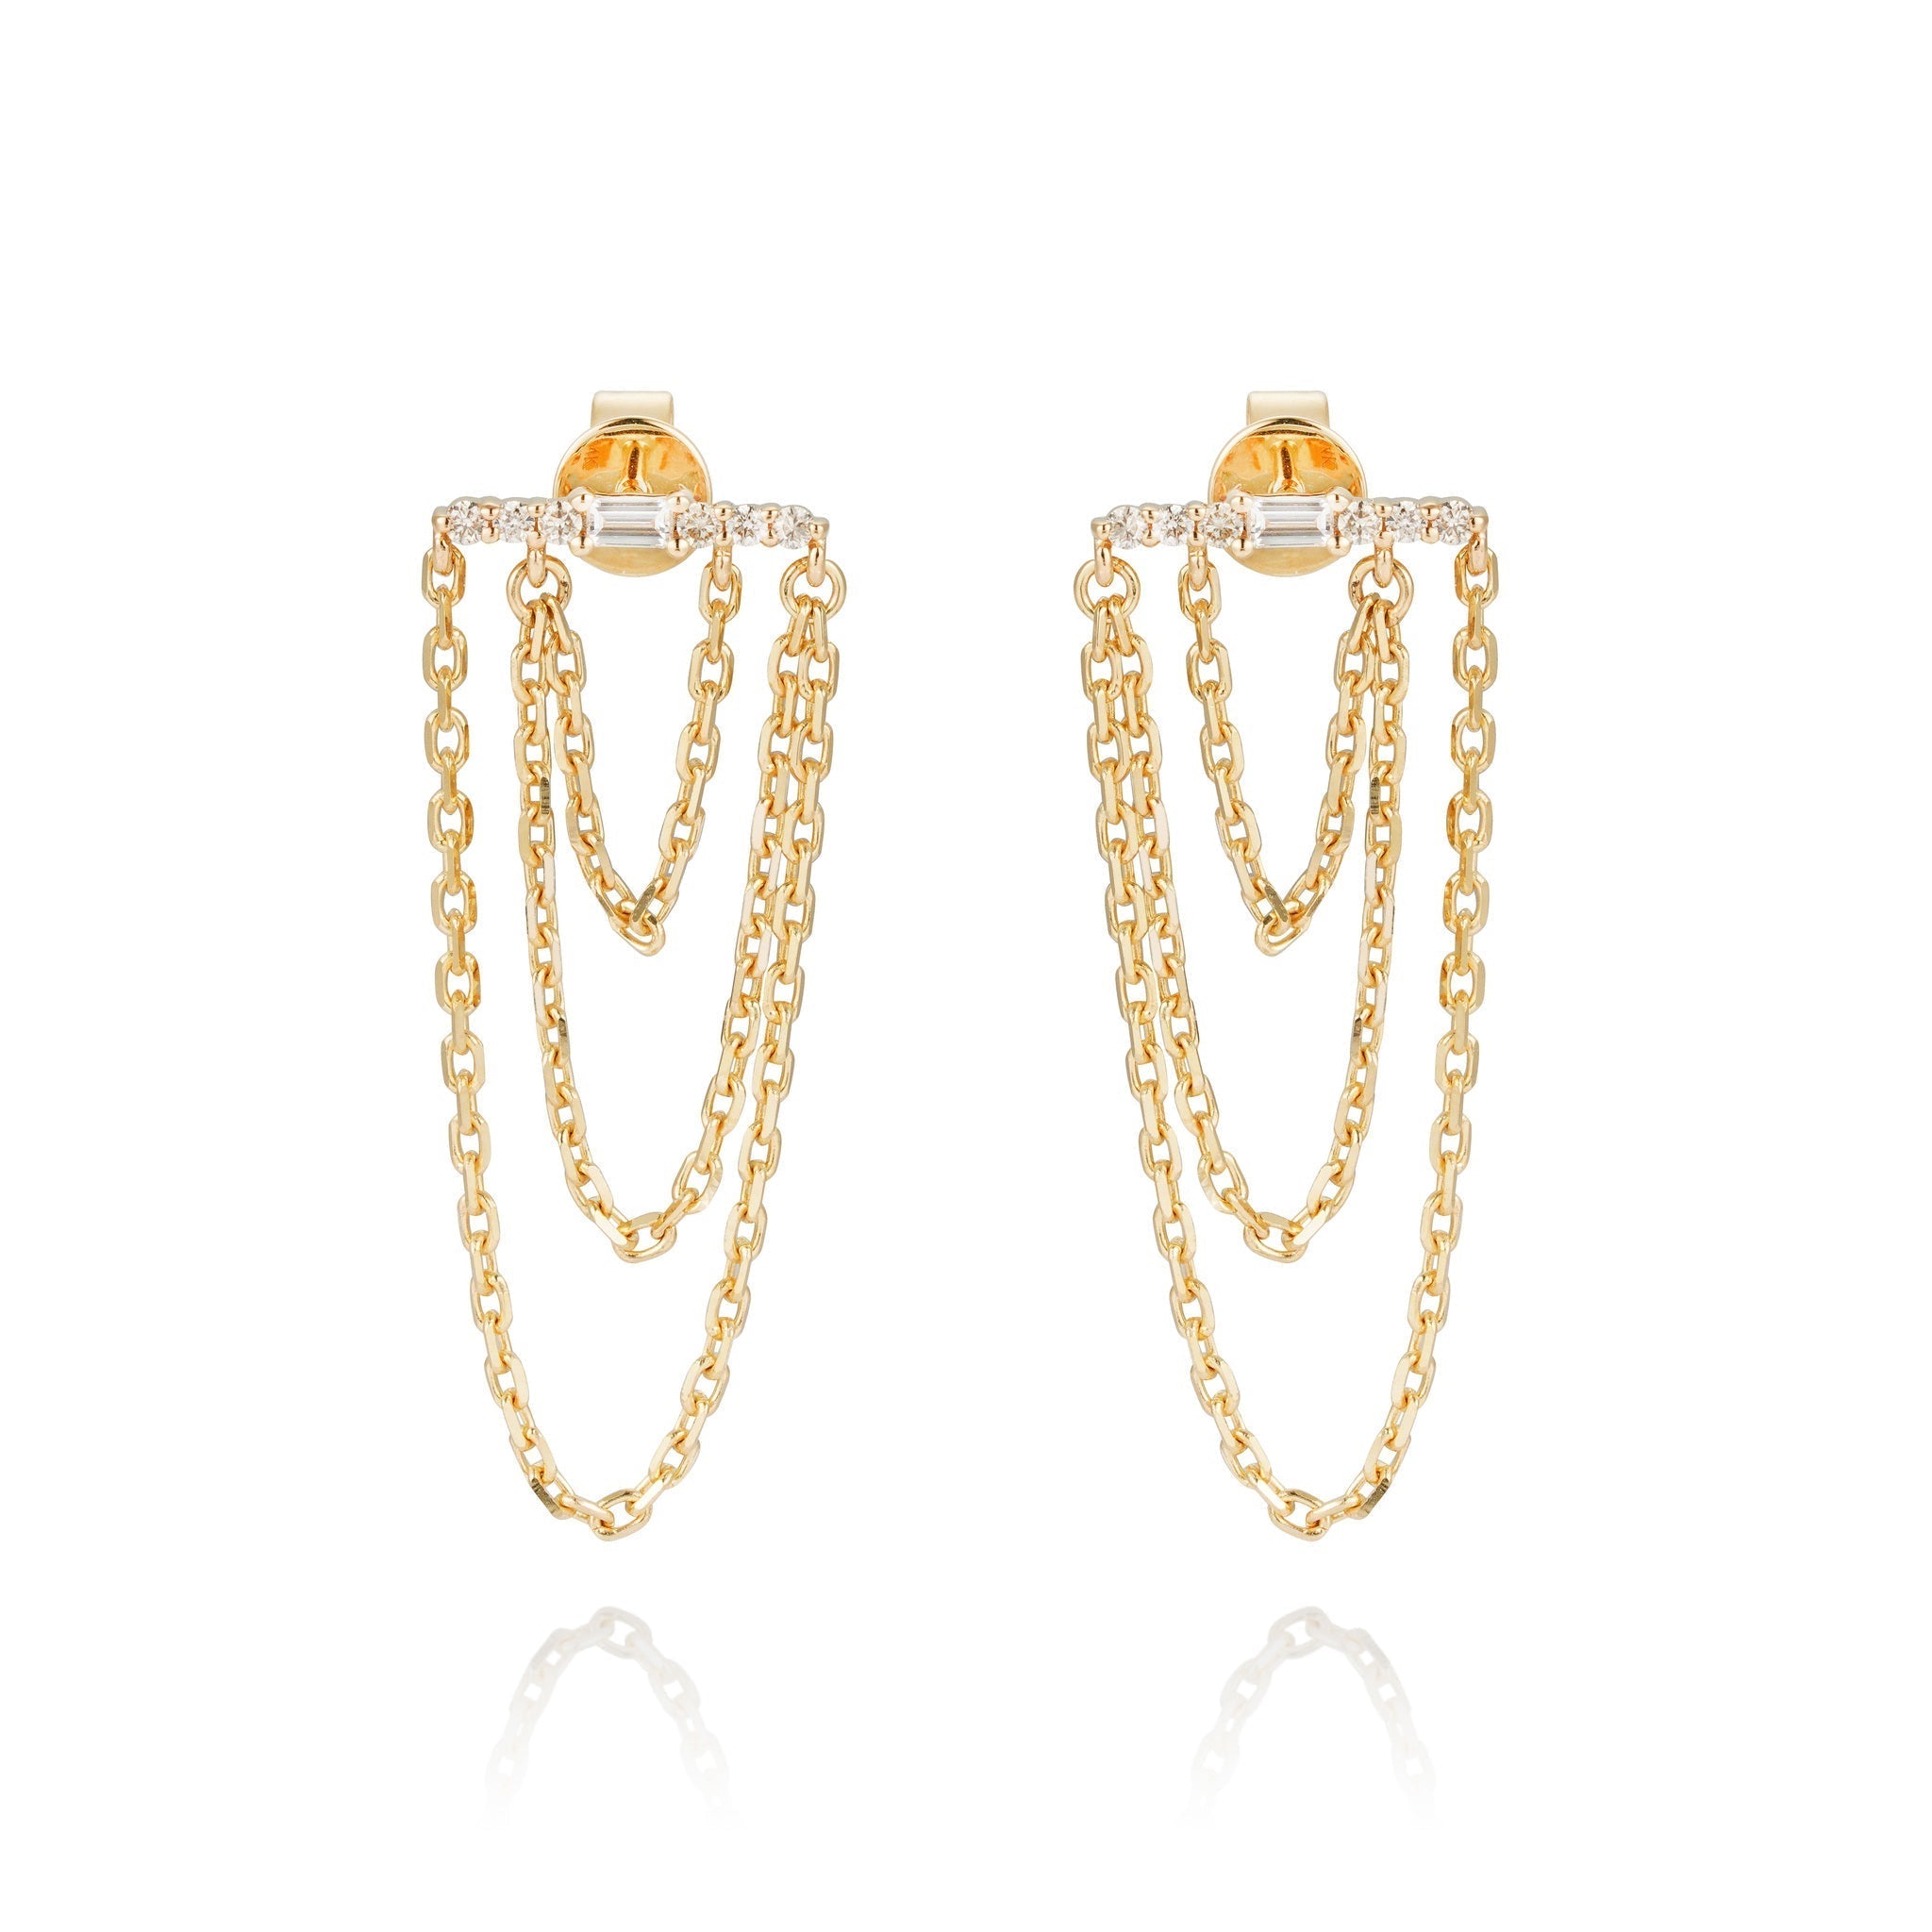 Golden Cascade Diamond Earrings